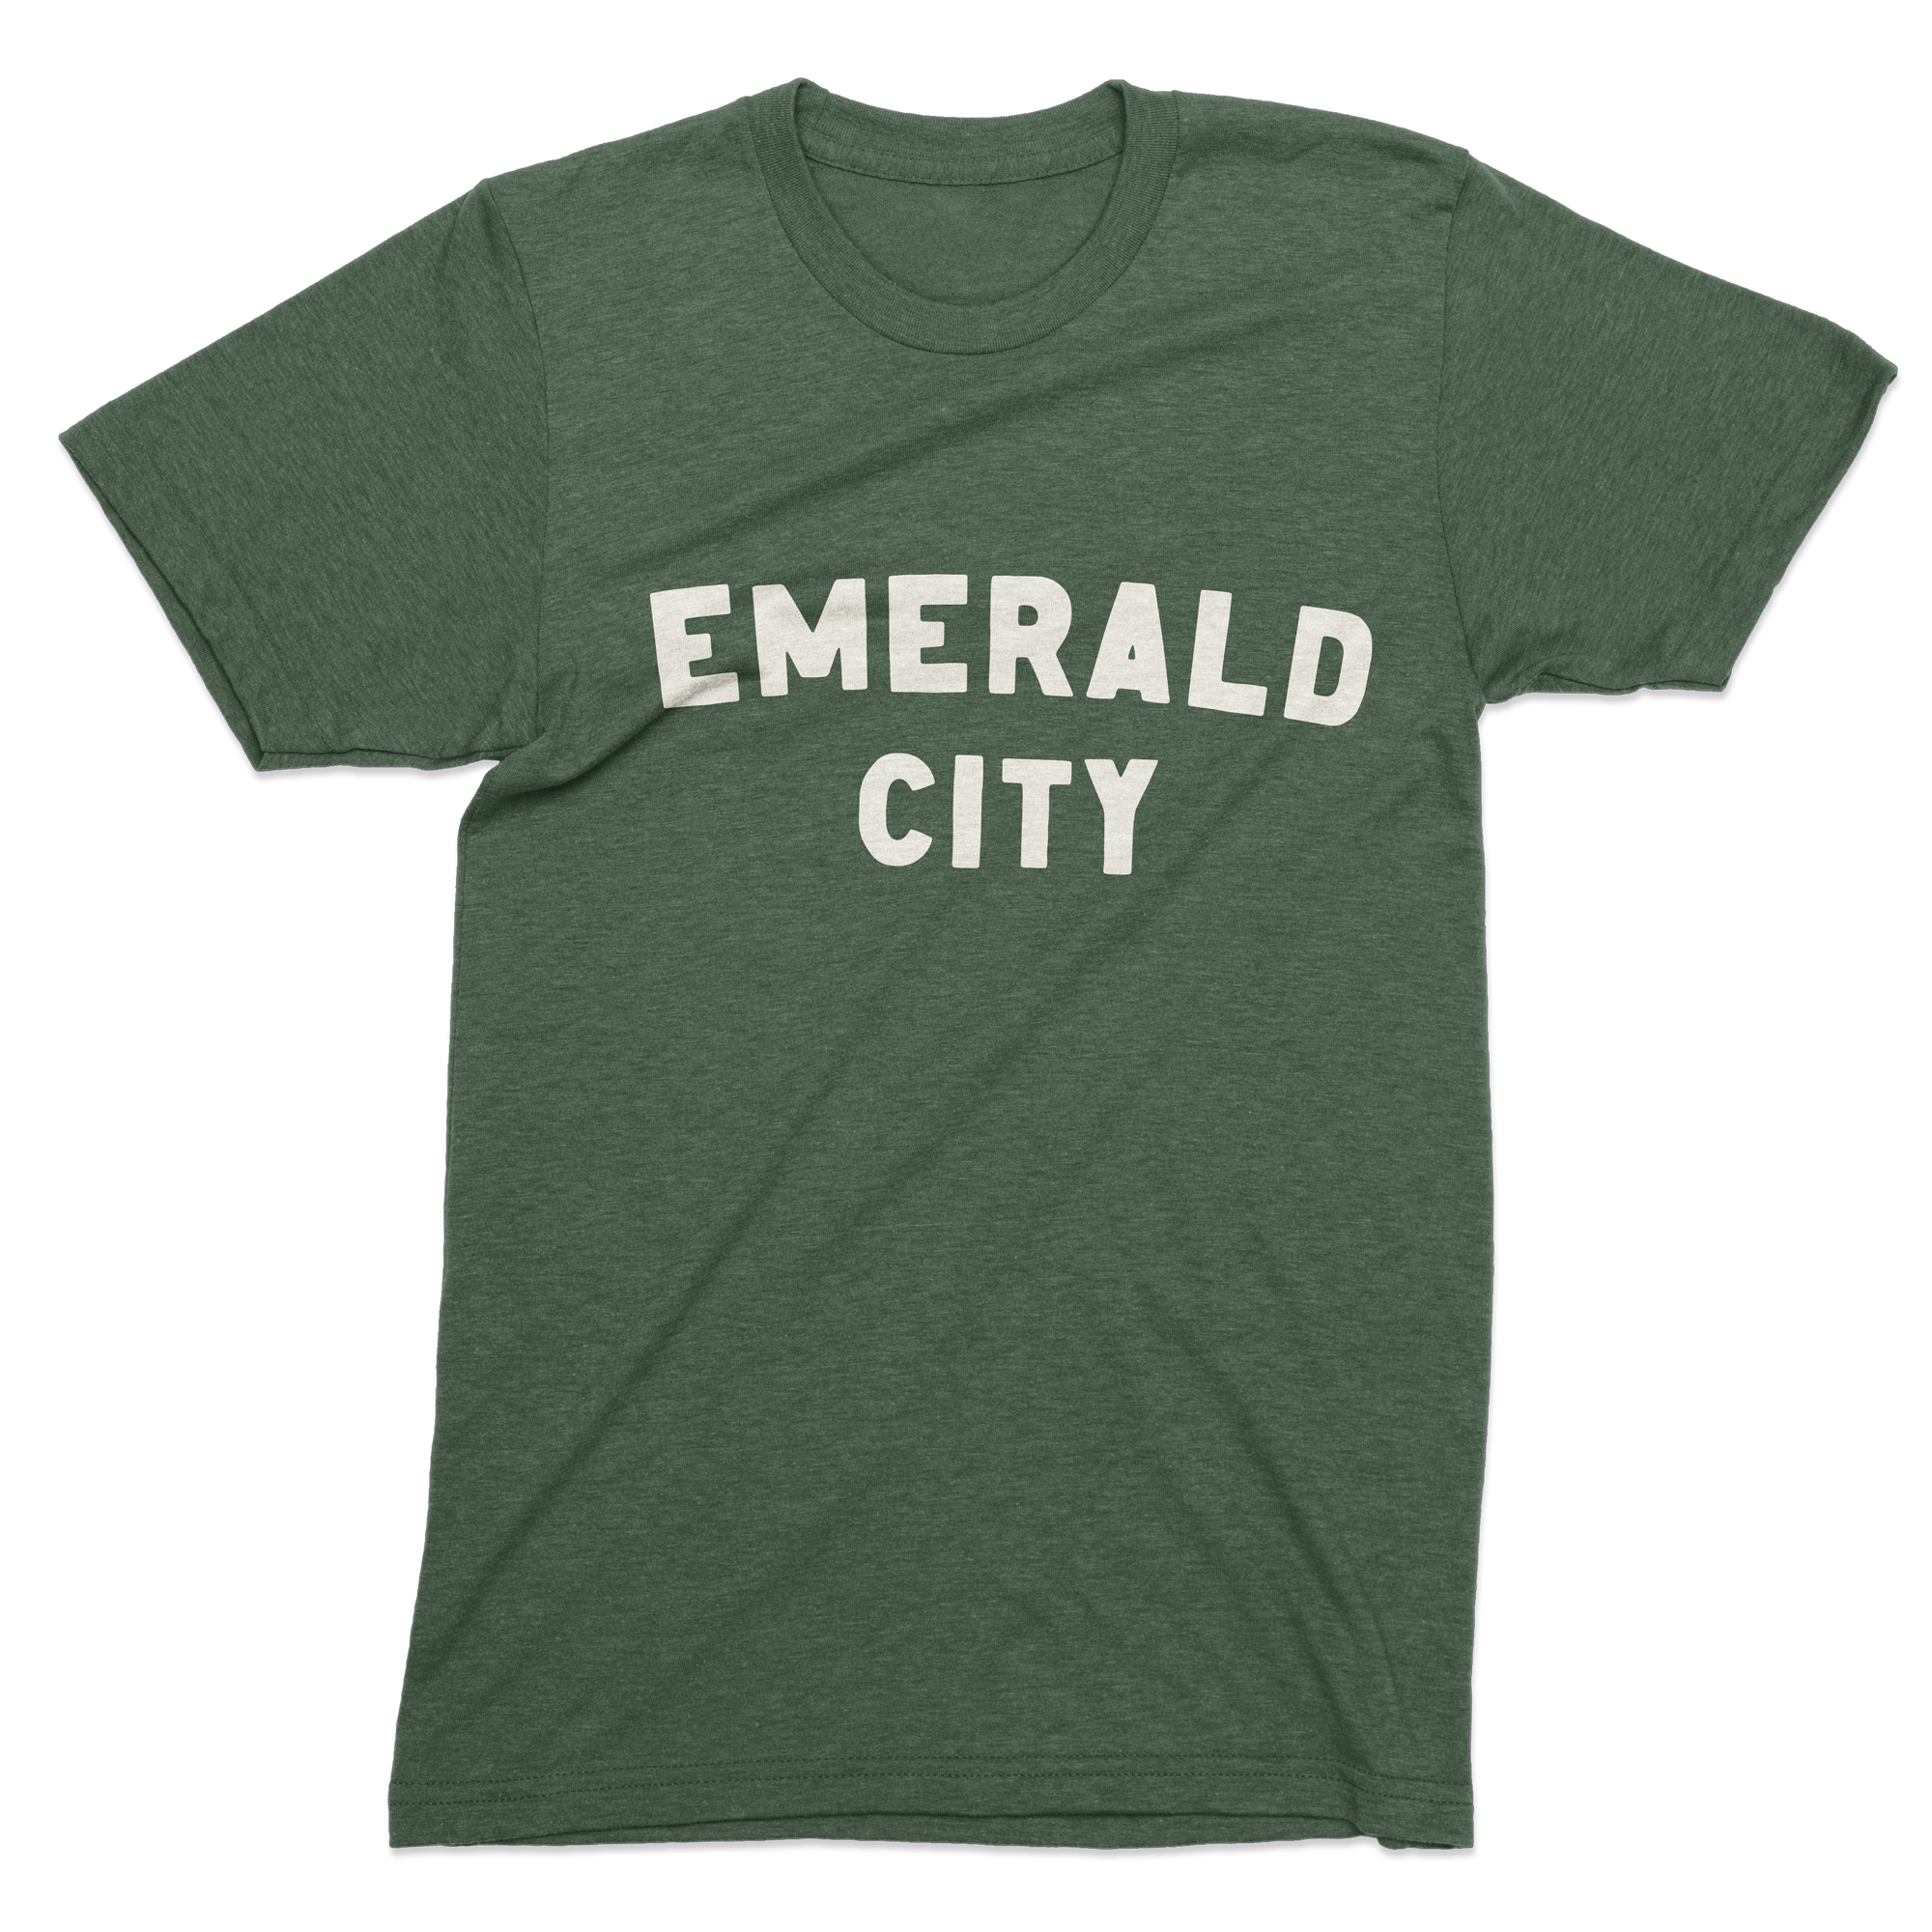 Emerald City tshirt - Viaduct